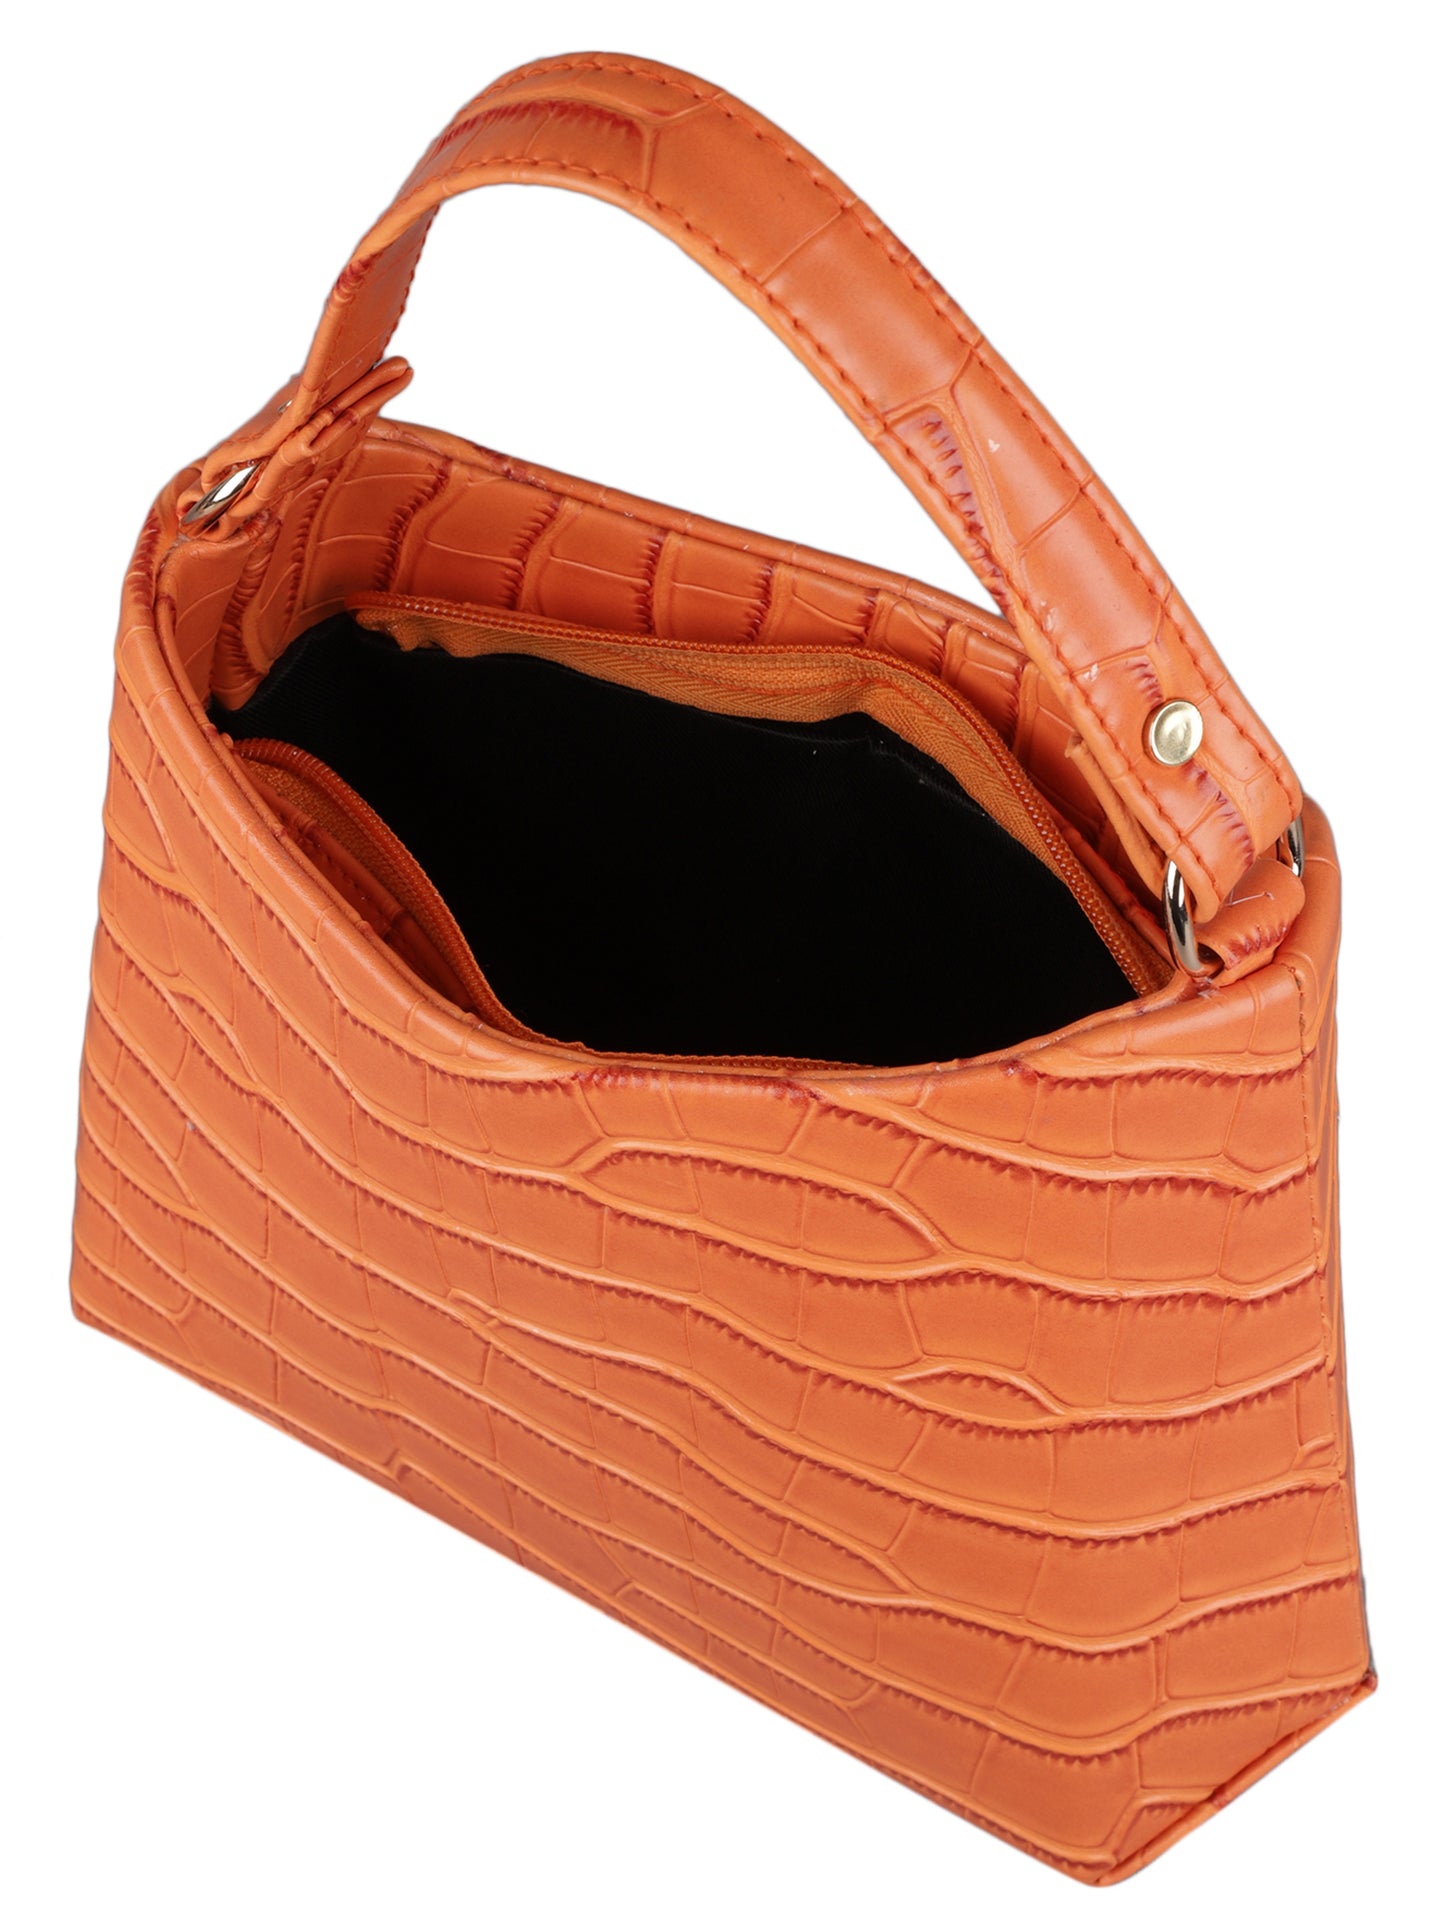 MINI WESST Women's Orange Handbags(MWHB051OR)